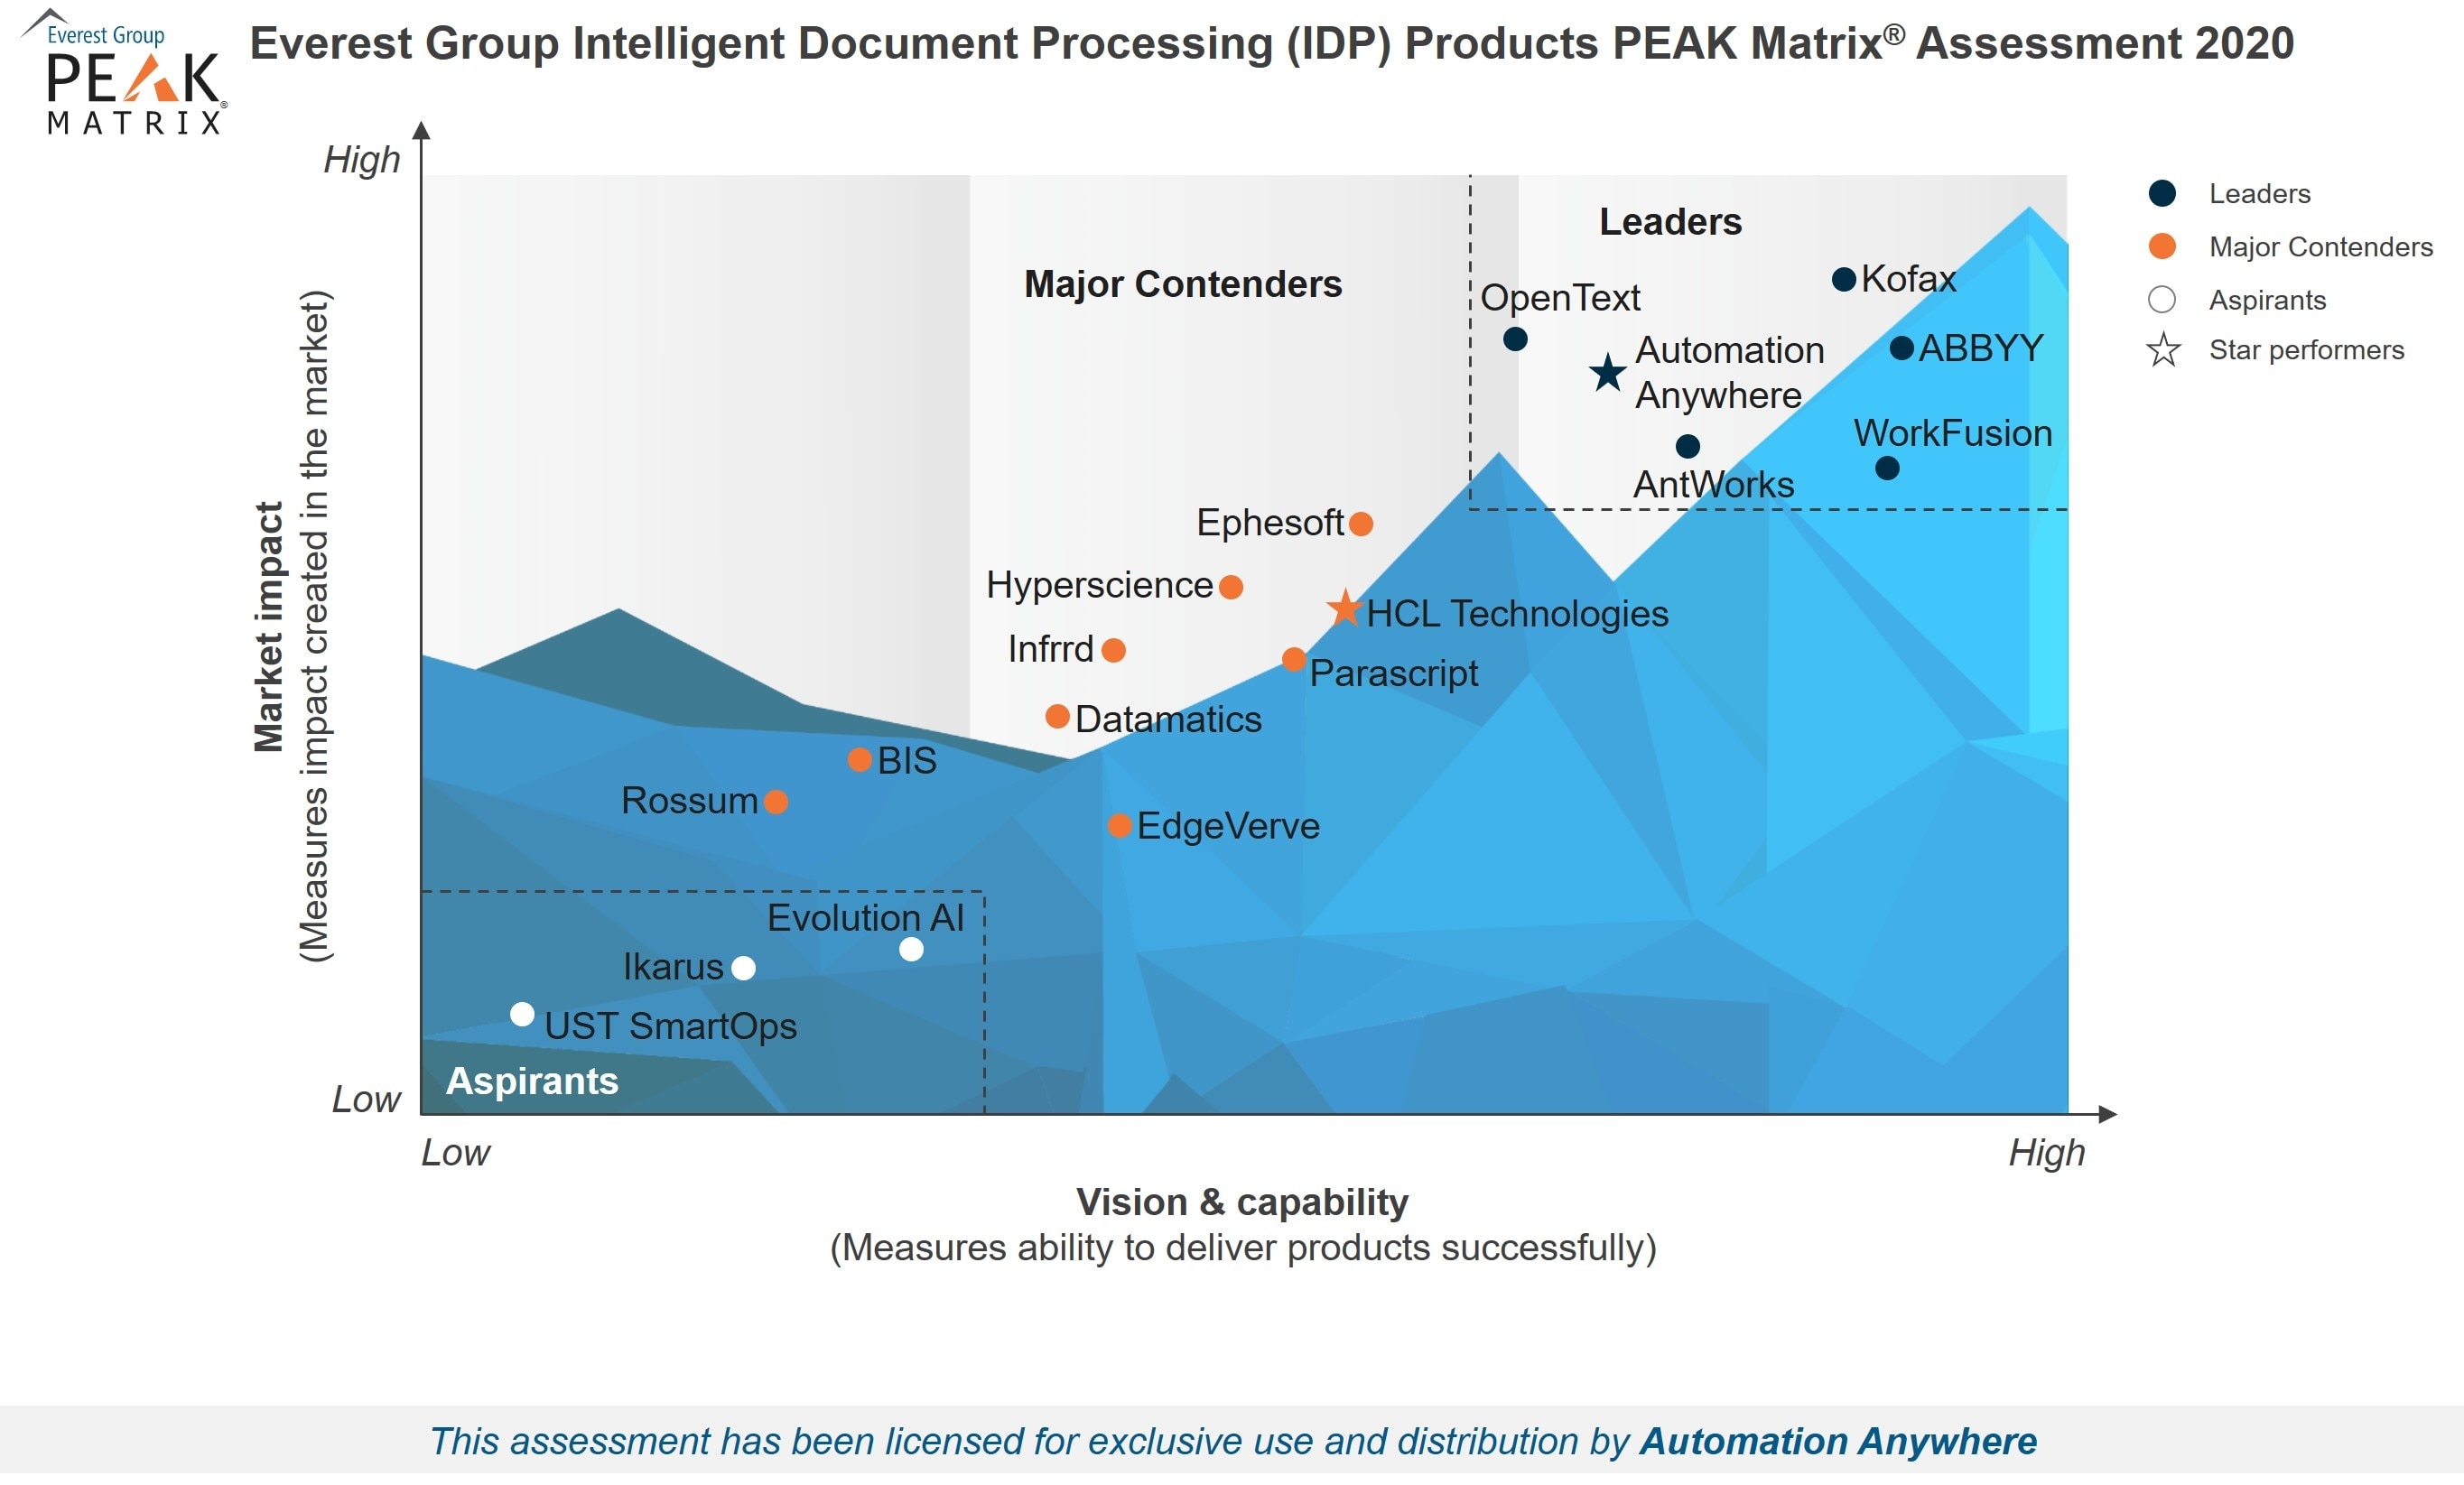 Products PEAK Matrix® Report